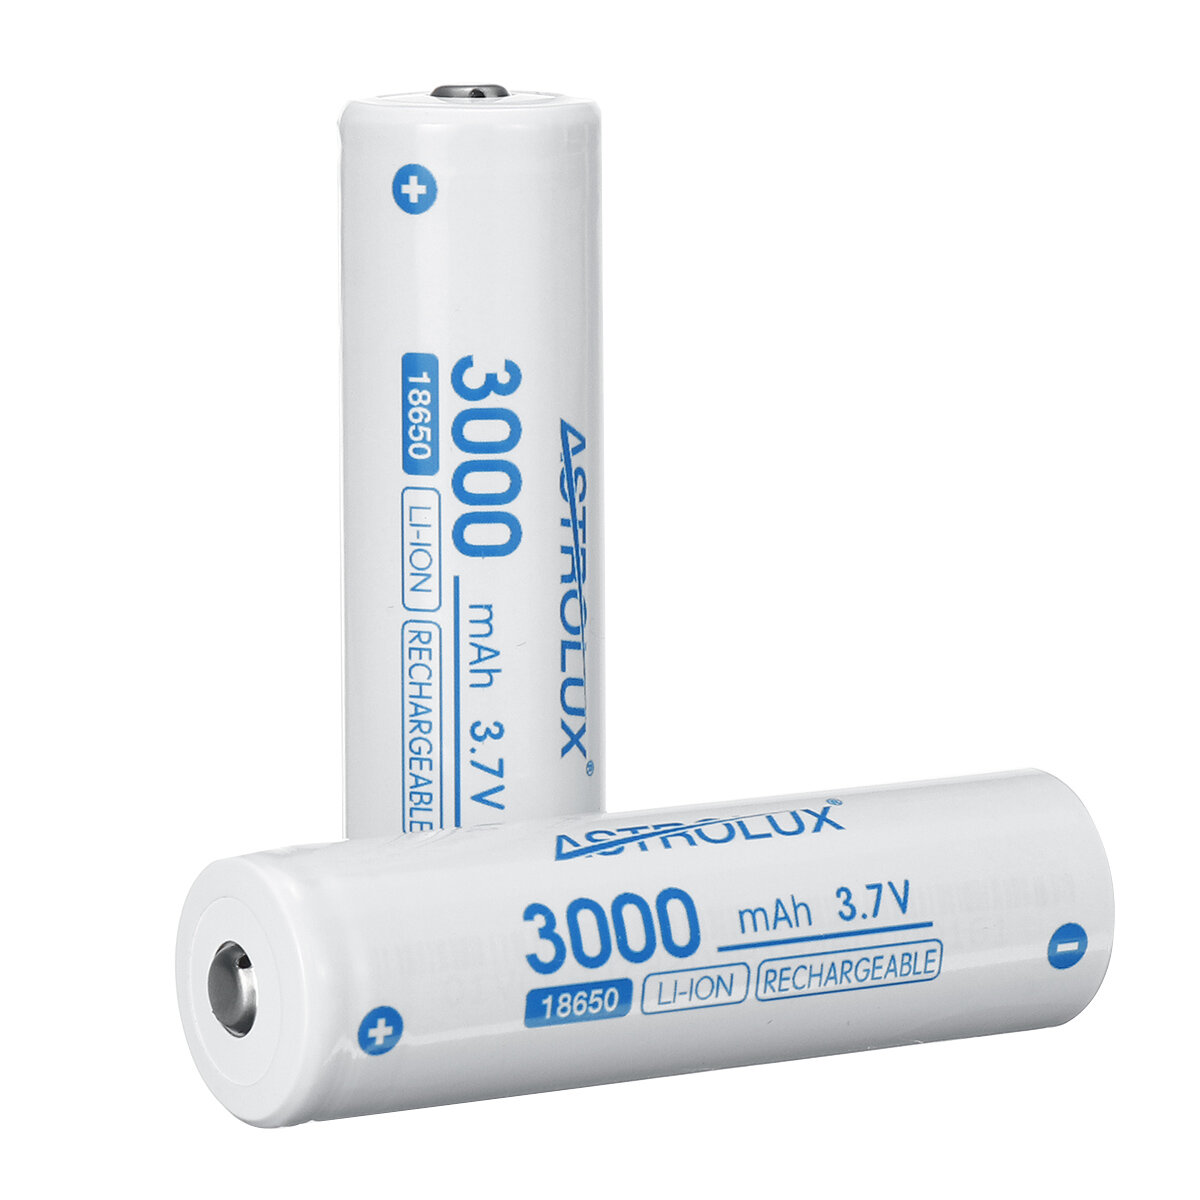 2Pcs Astrolux? C1830 3000mAh 3C 3.7V 18650 Li-ion Battery 9.6A High Performance Rechargeable Lithium